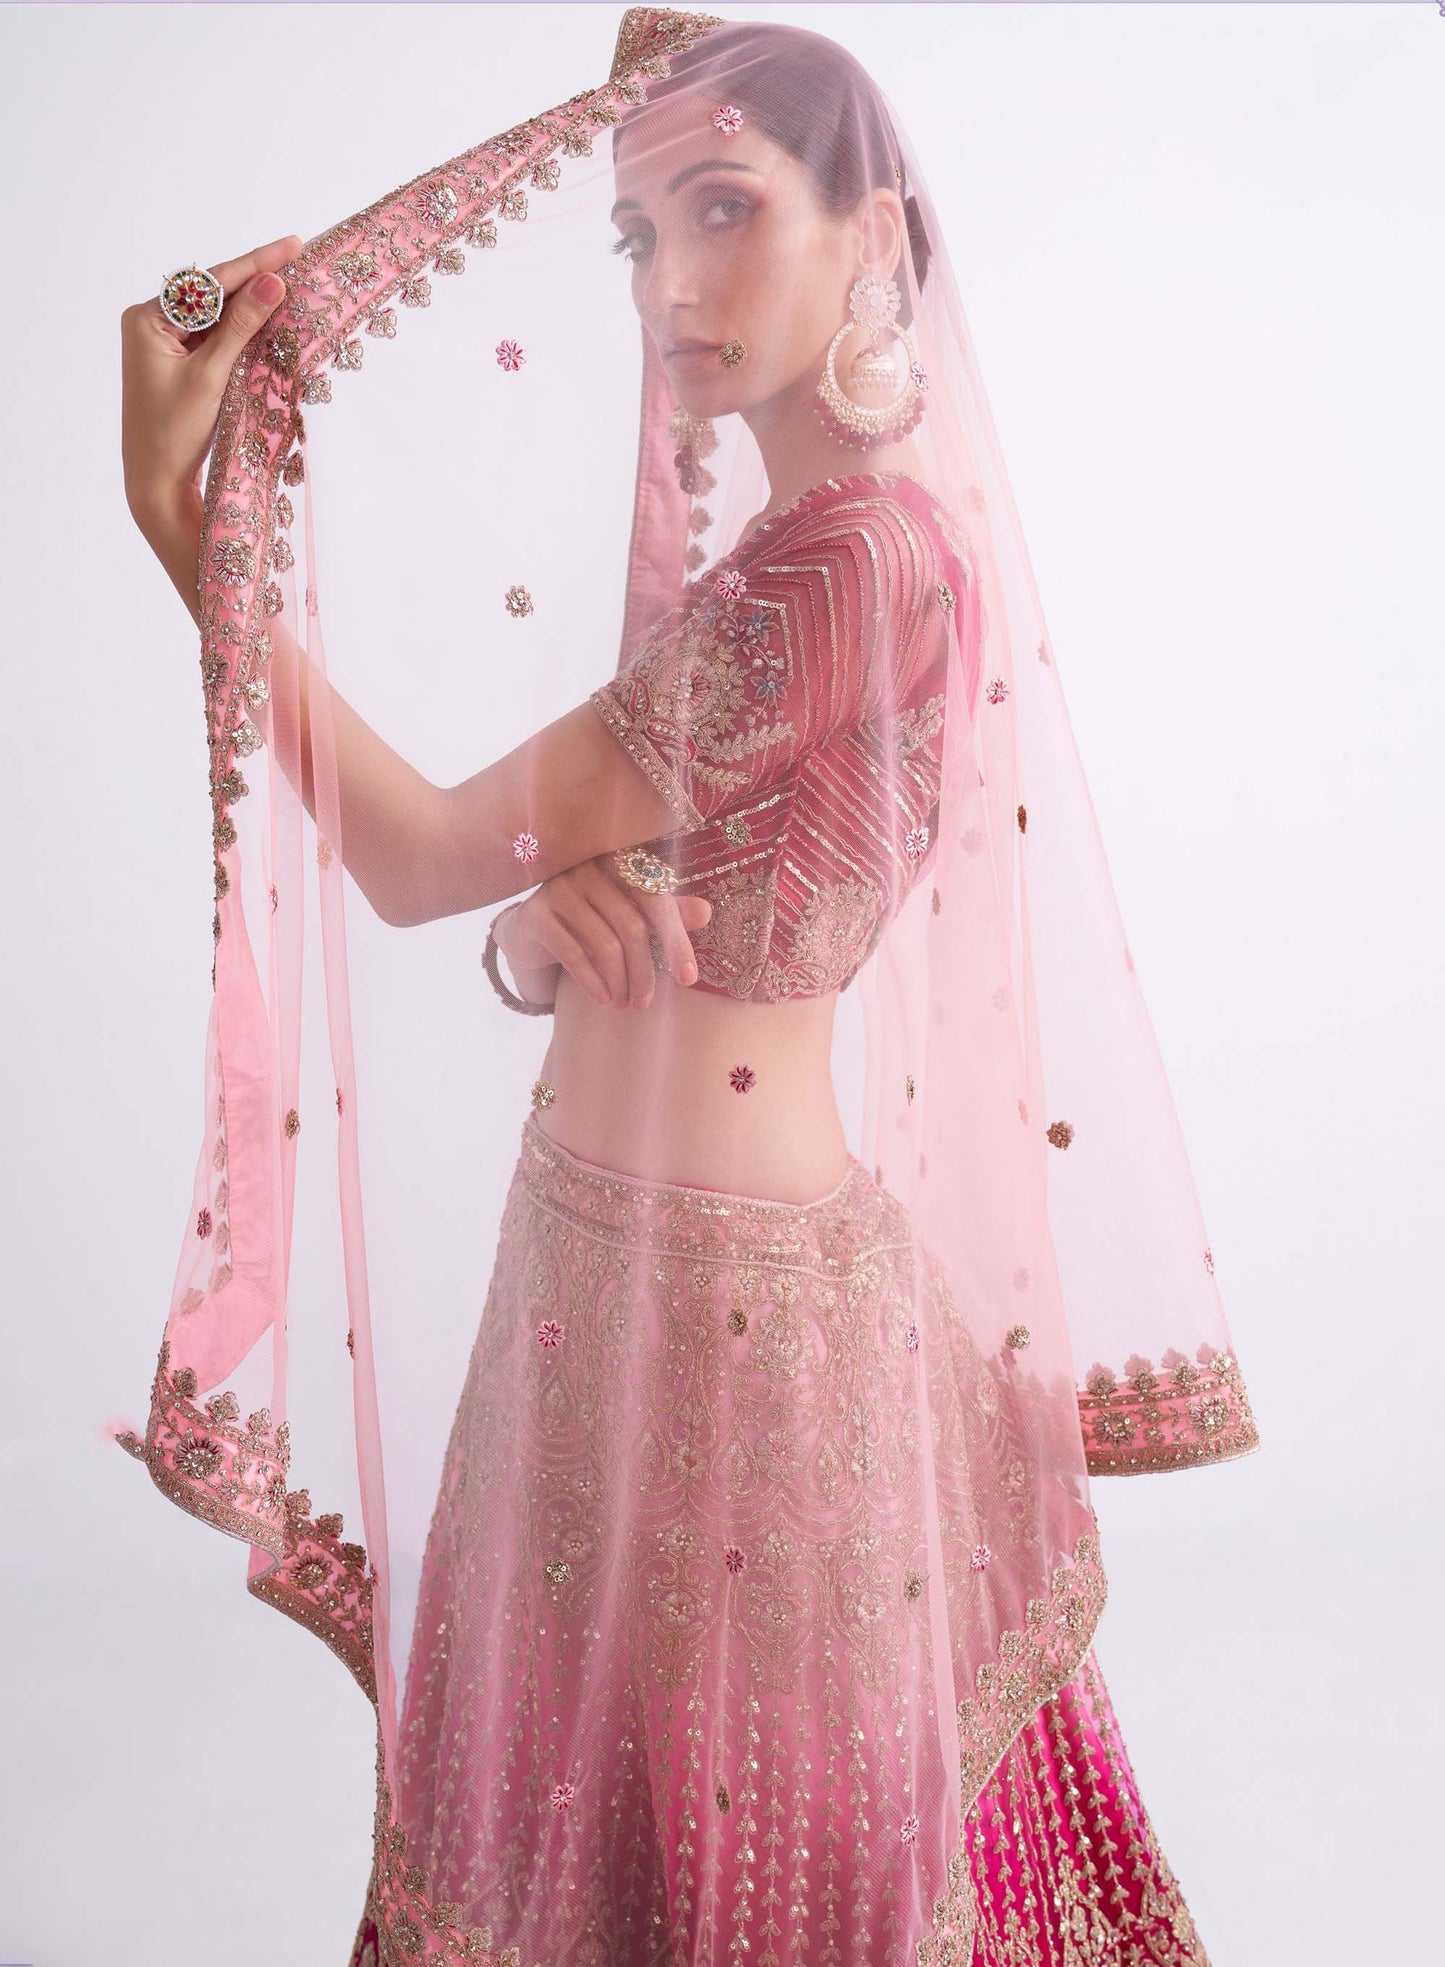 Shaded Rani Pink Zarkan Embroidery Net Bridesmaid Lehenga